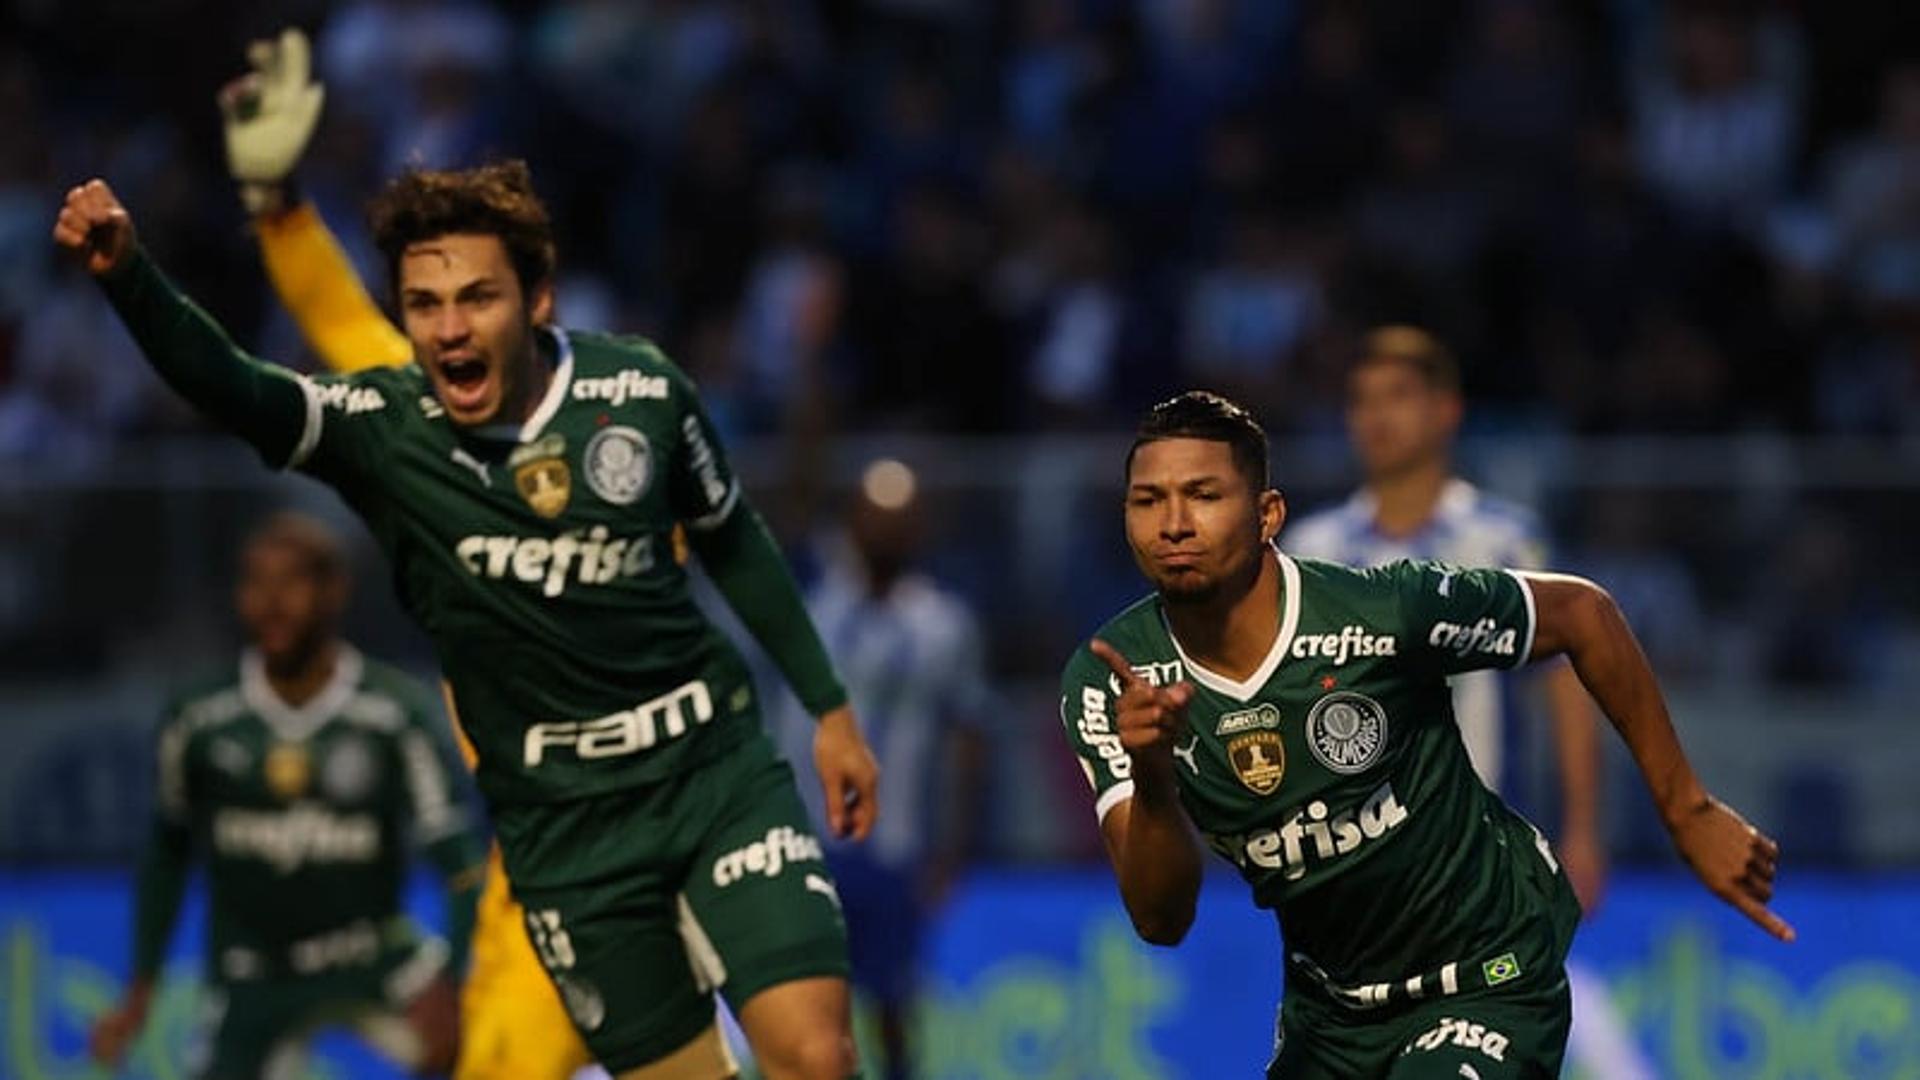 Avaí x Palmeiras - Rony e Veiga